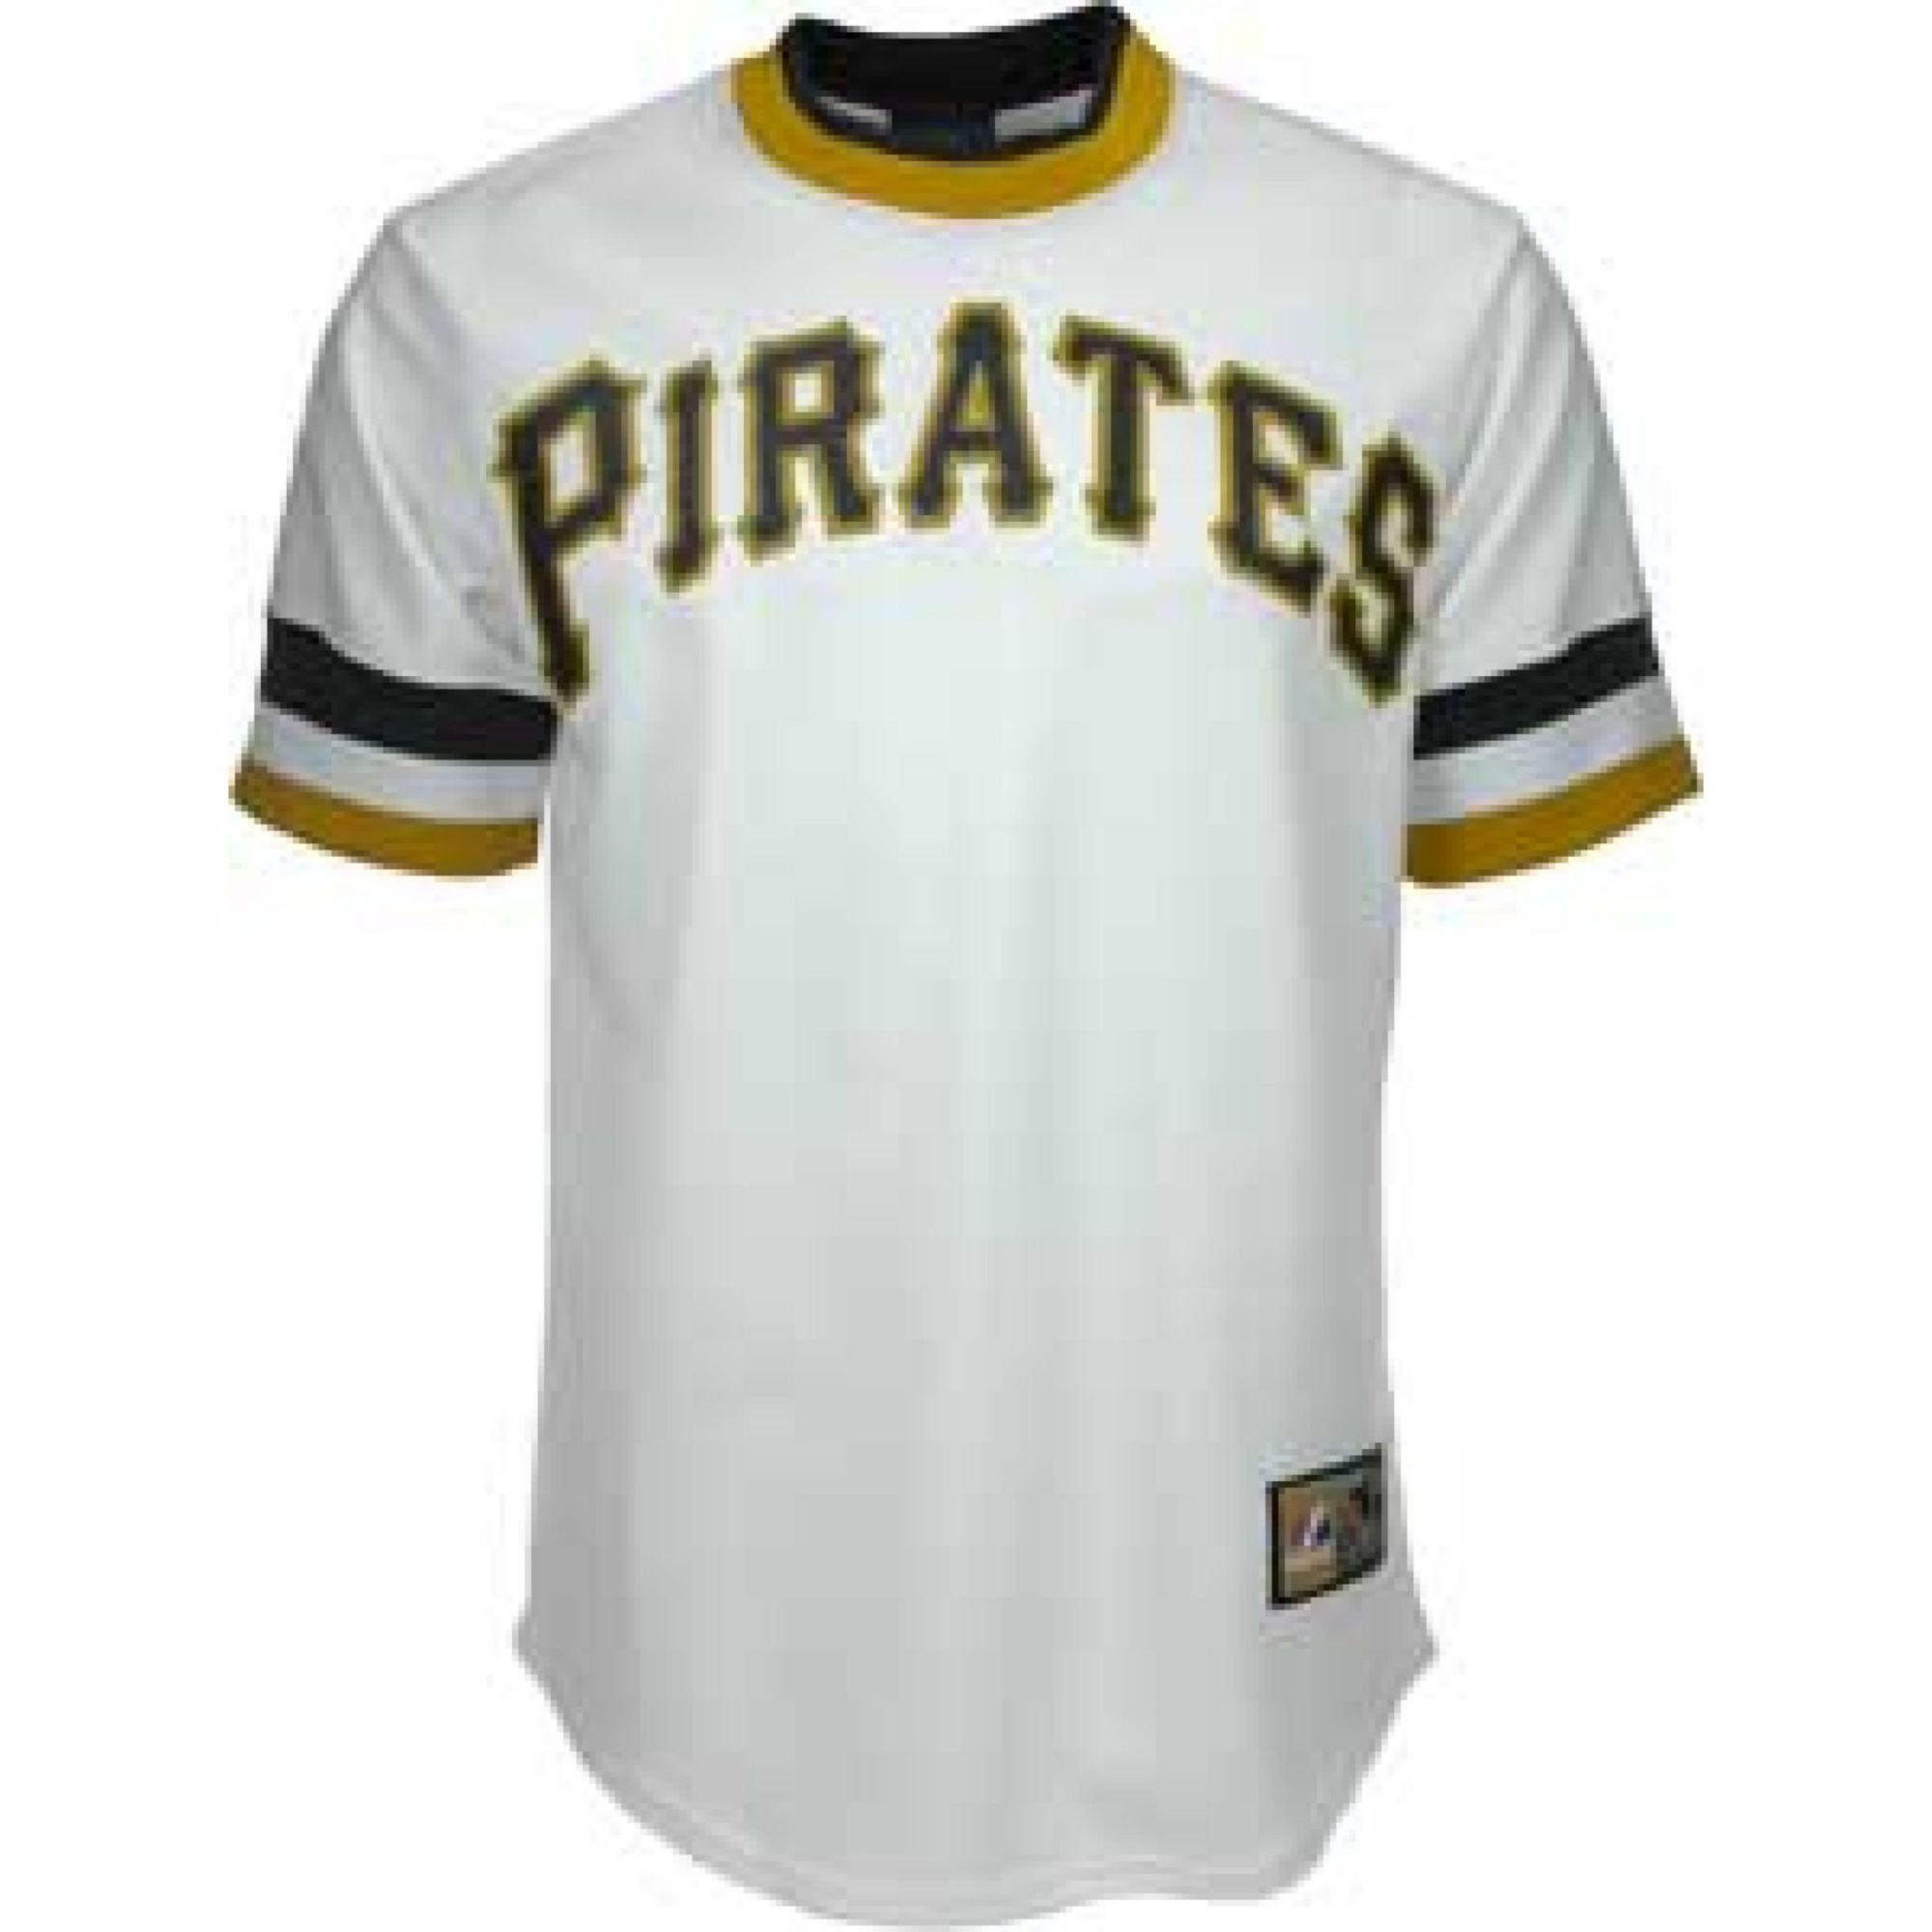 pittsburgh pirates replica jersey